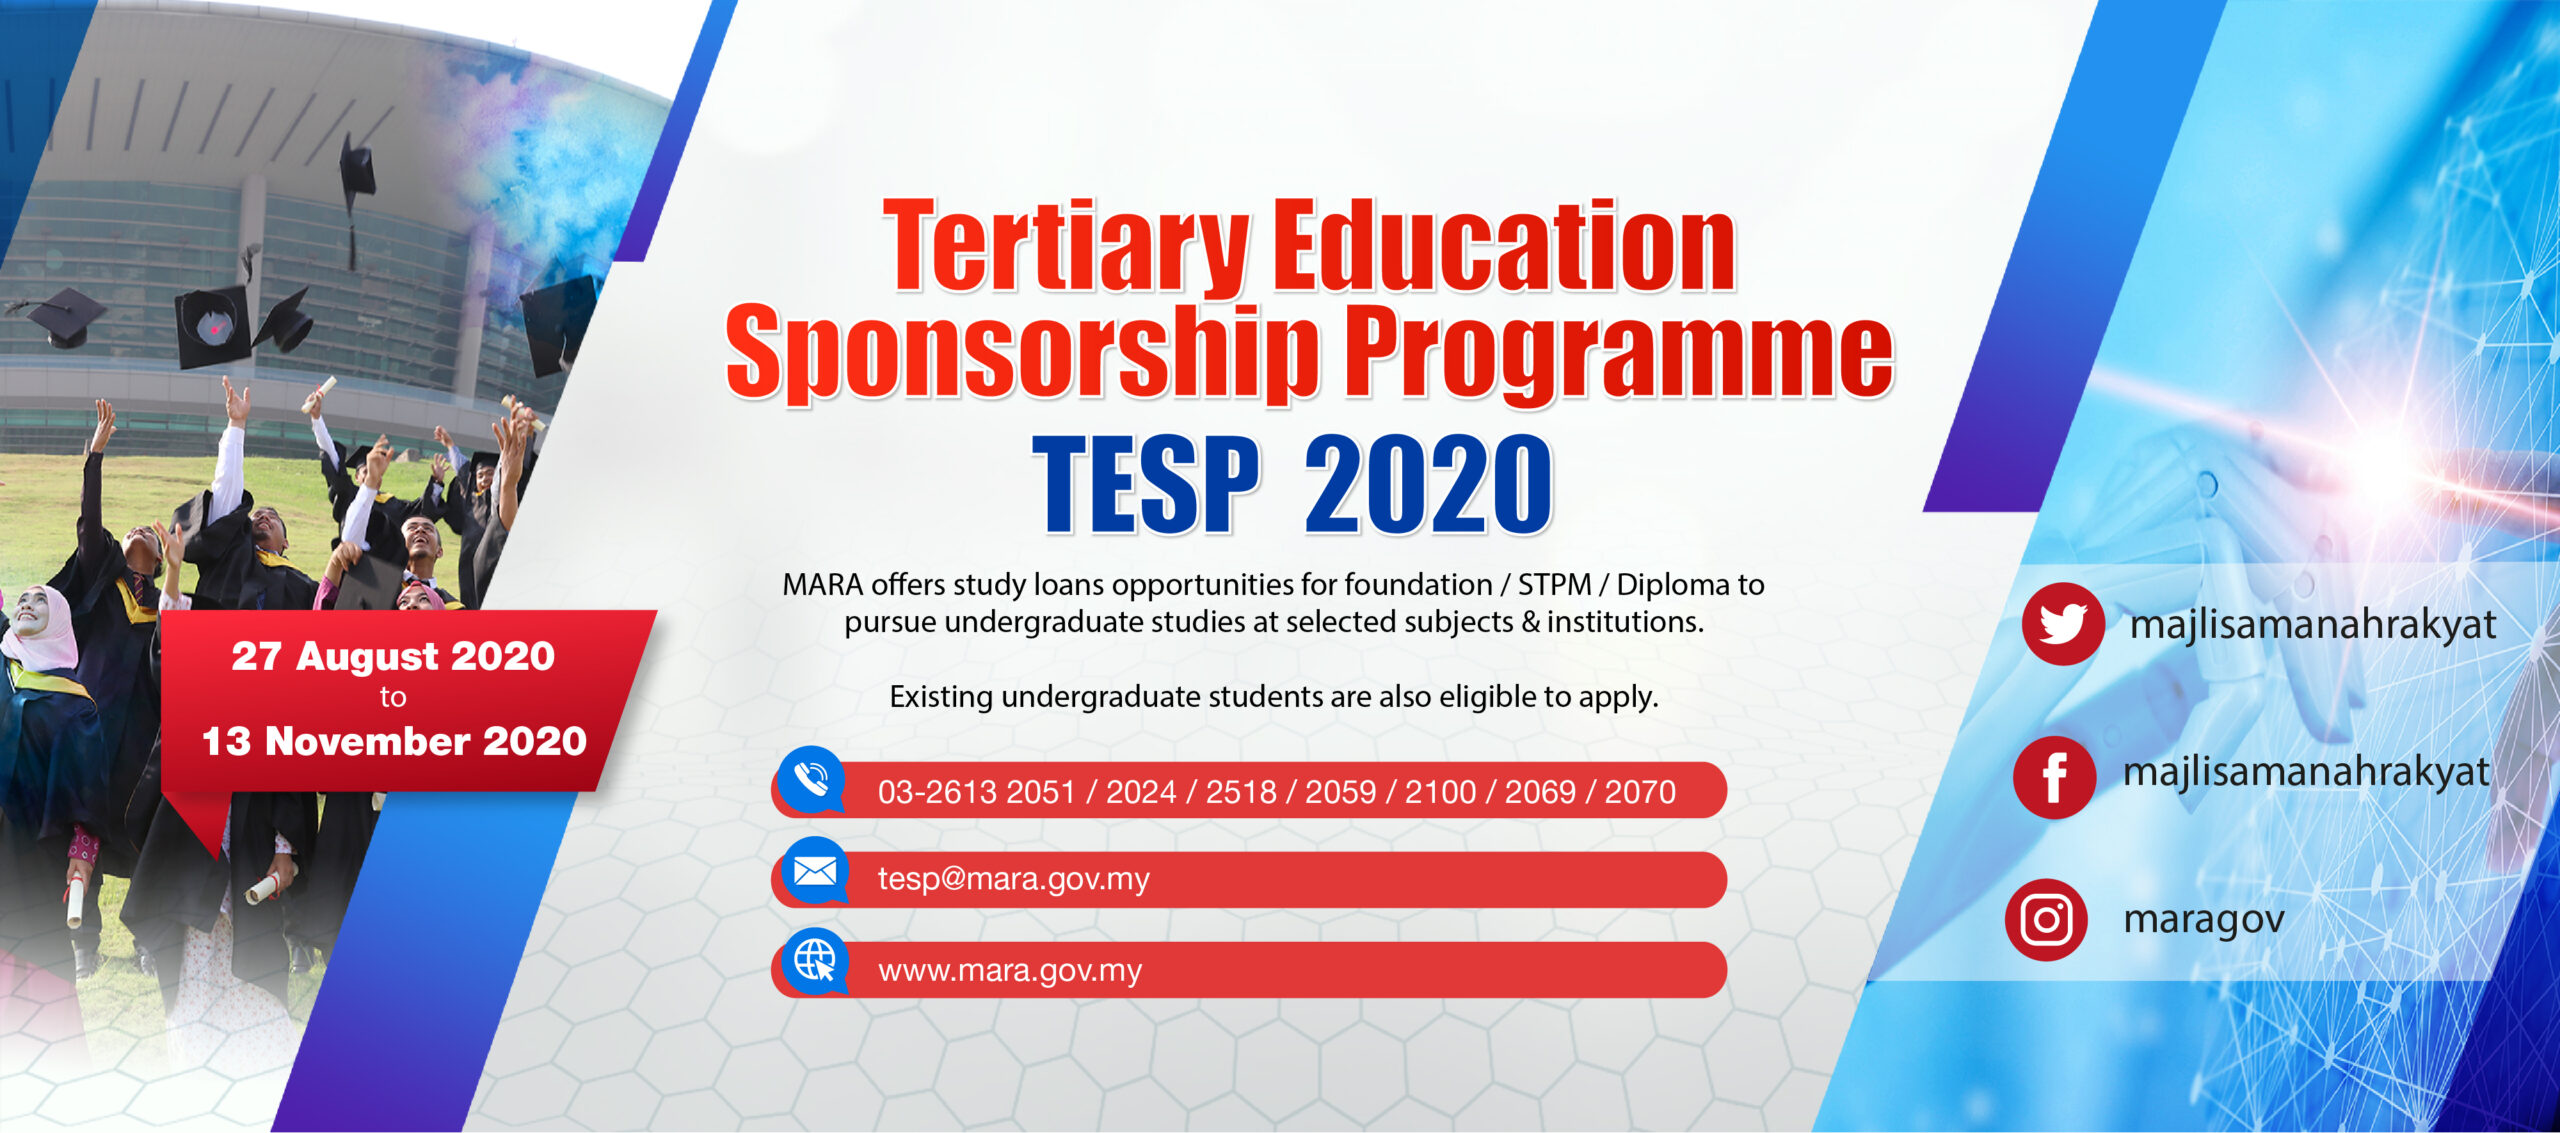 Tertiary Education Sponsorship Programme Tesp 2020 Majlis Amanah Rakyat